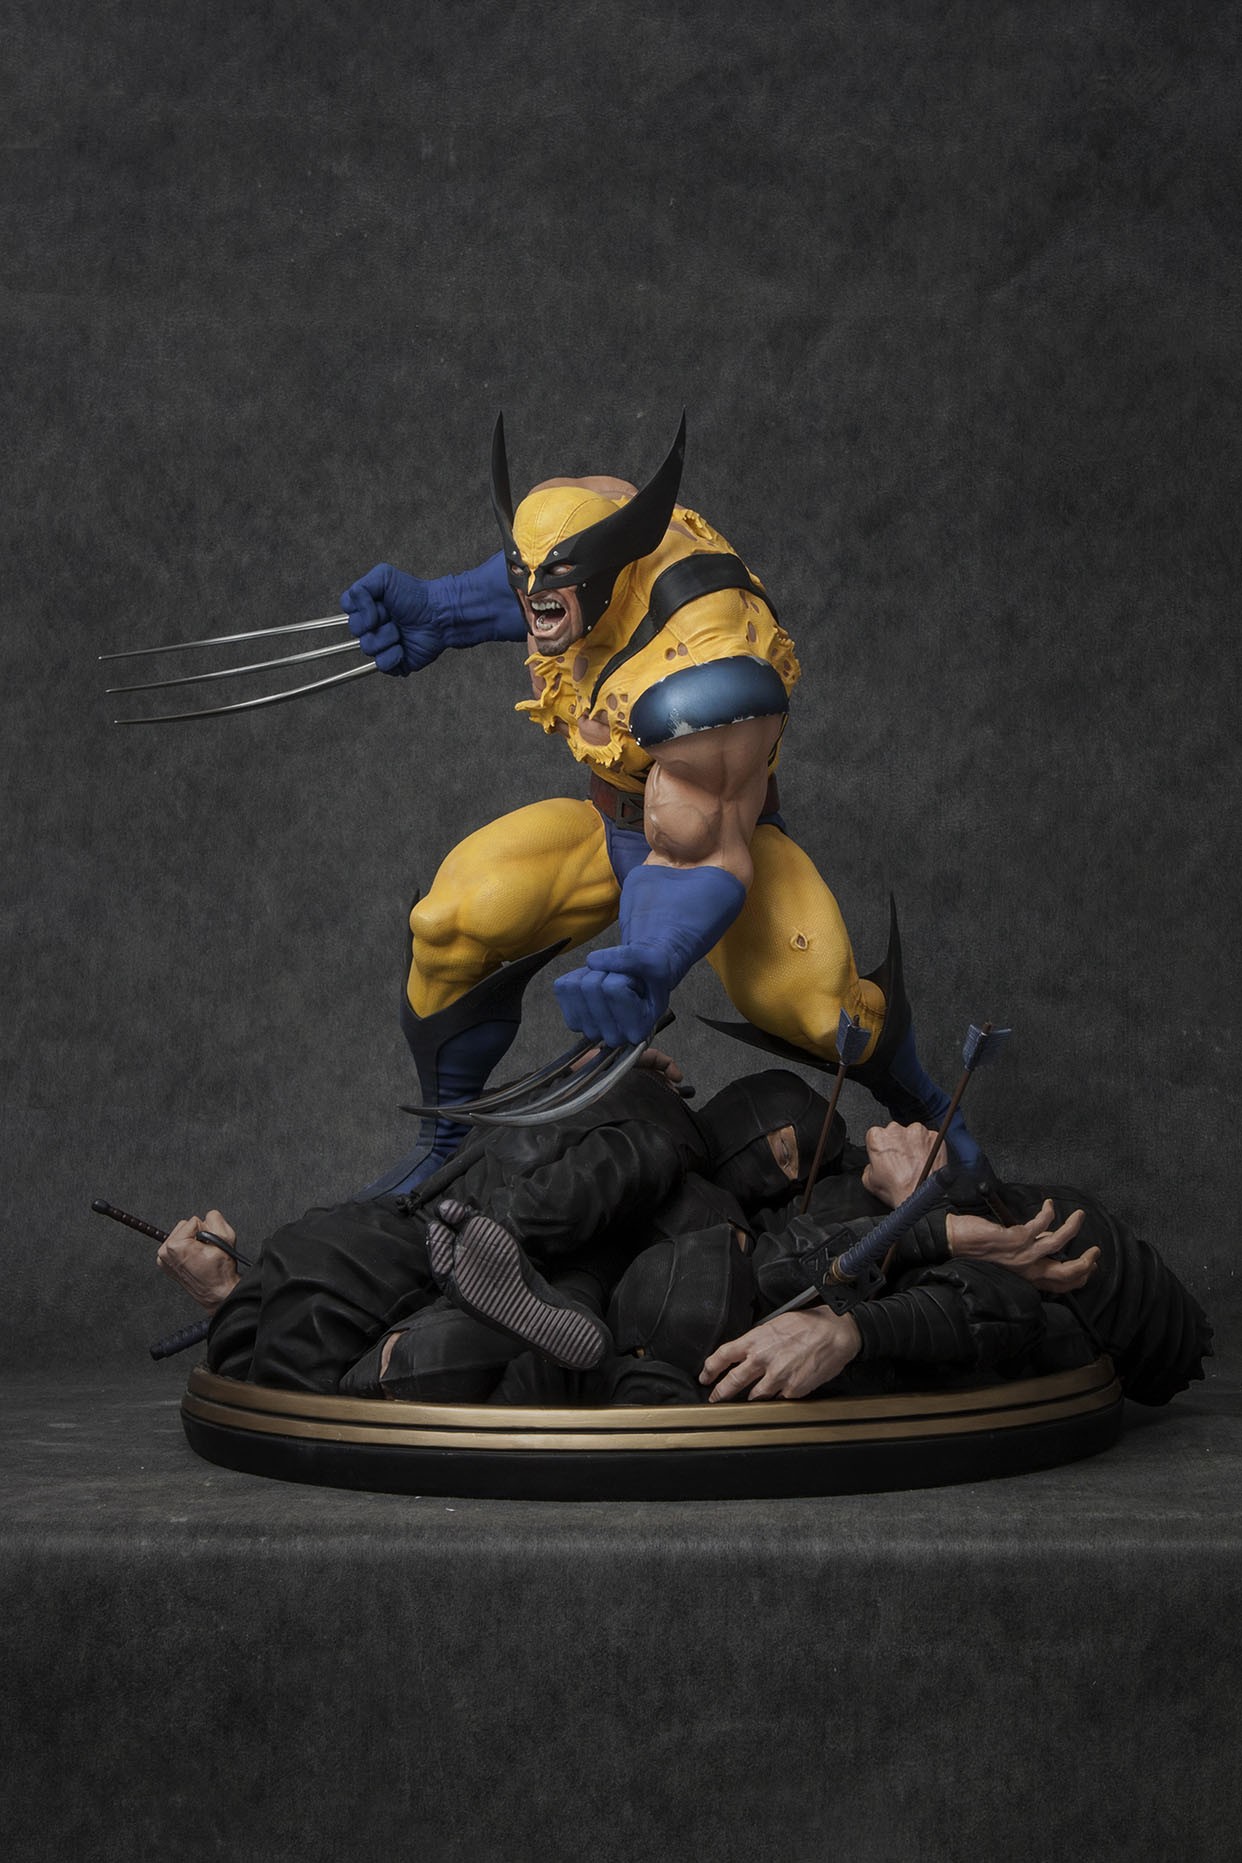 General 1242x1863 X-Men Wolverine action figures superhero digital art portrait display simple background